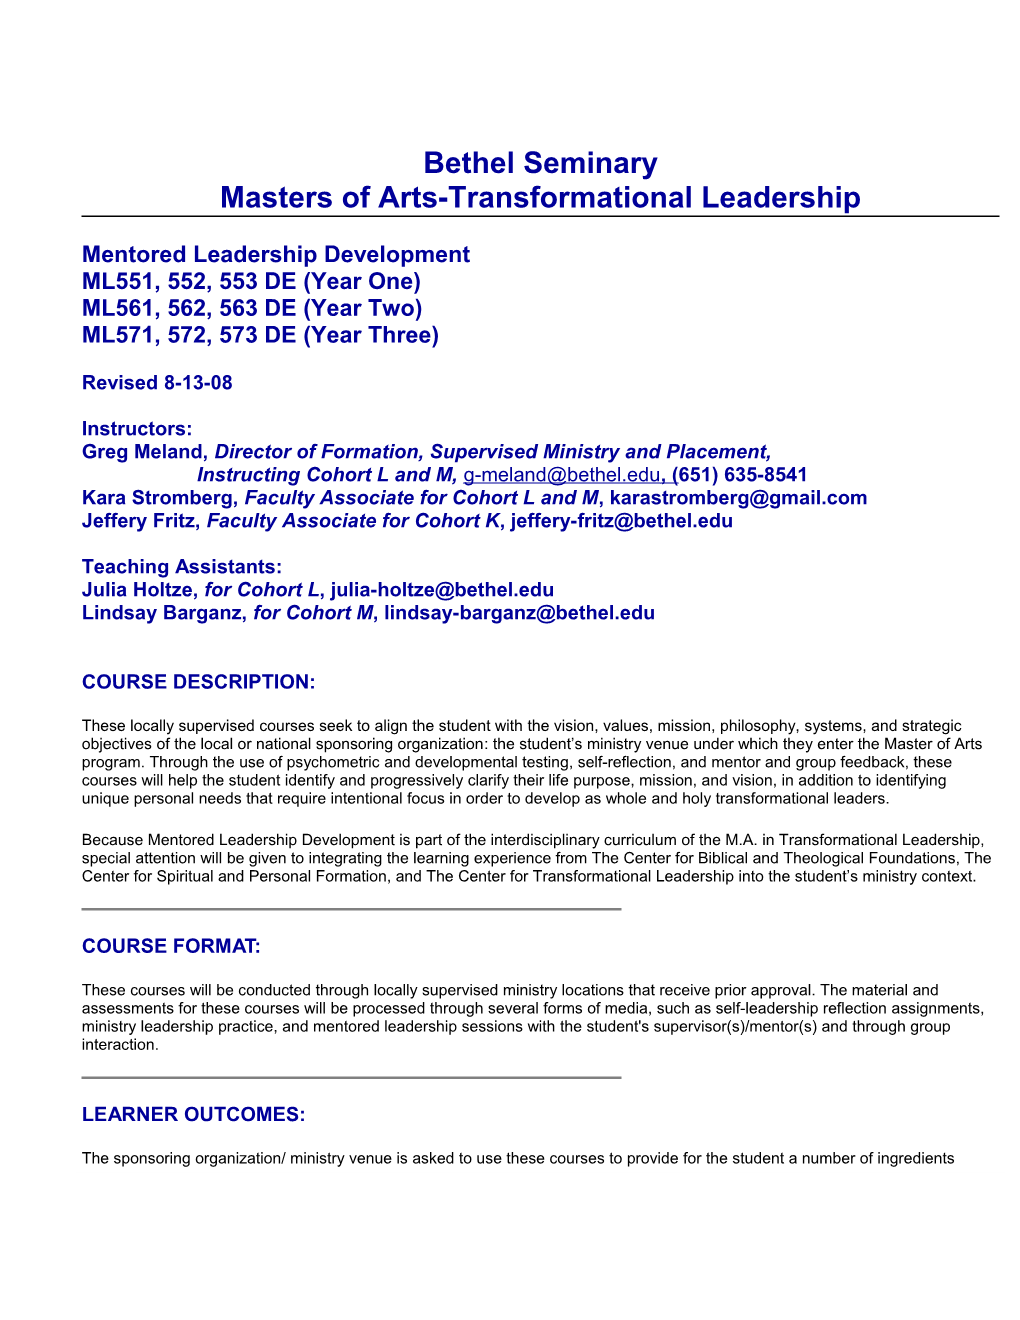 Bethel Seminary Masters of Arts-Transformational Leadership Mentored Leadership Development